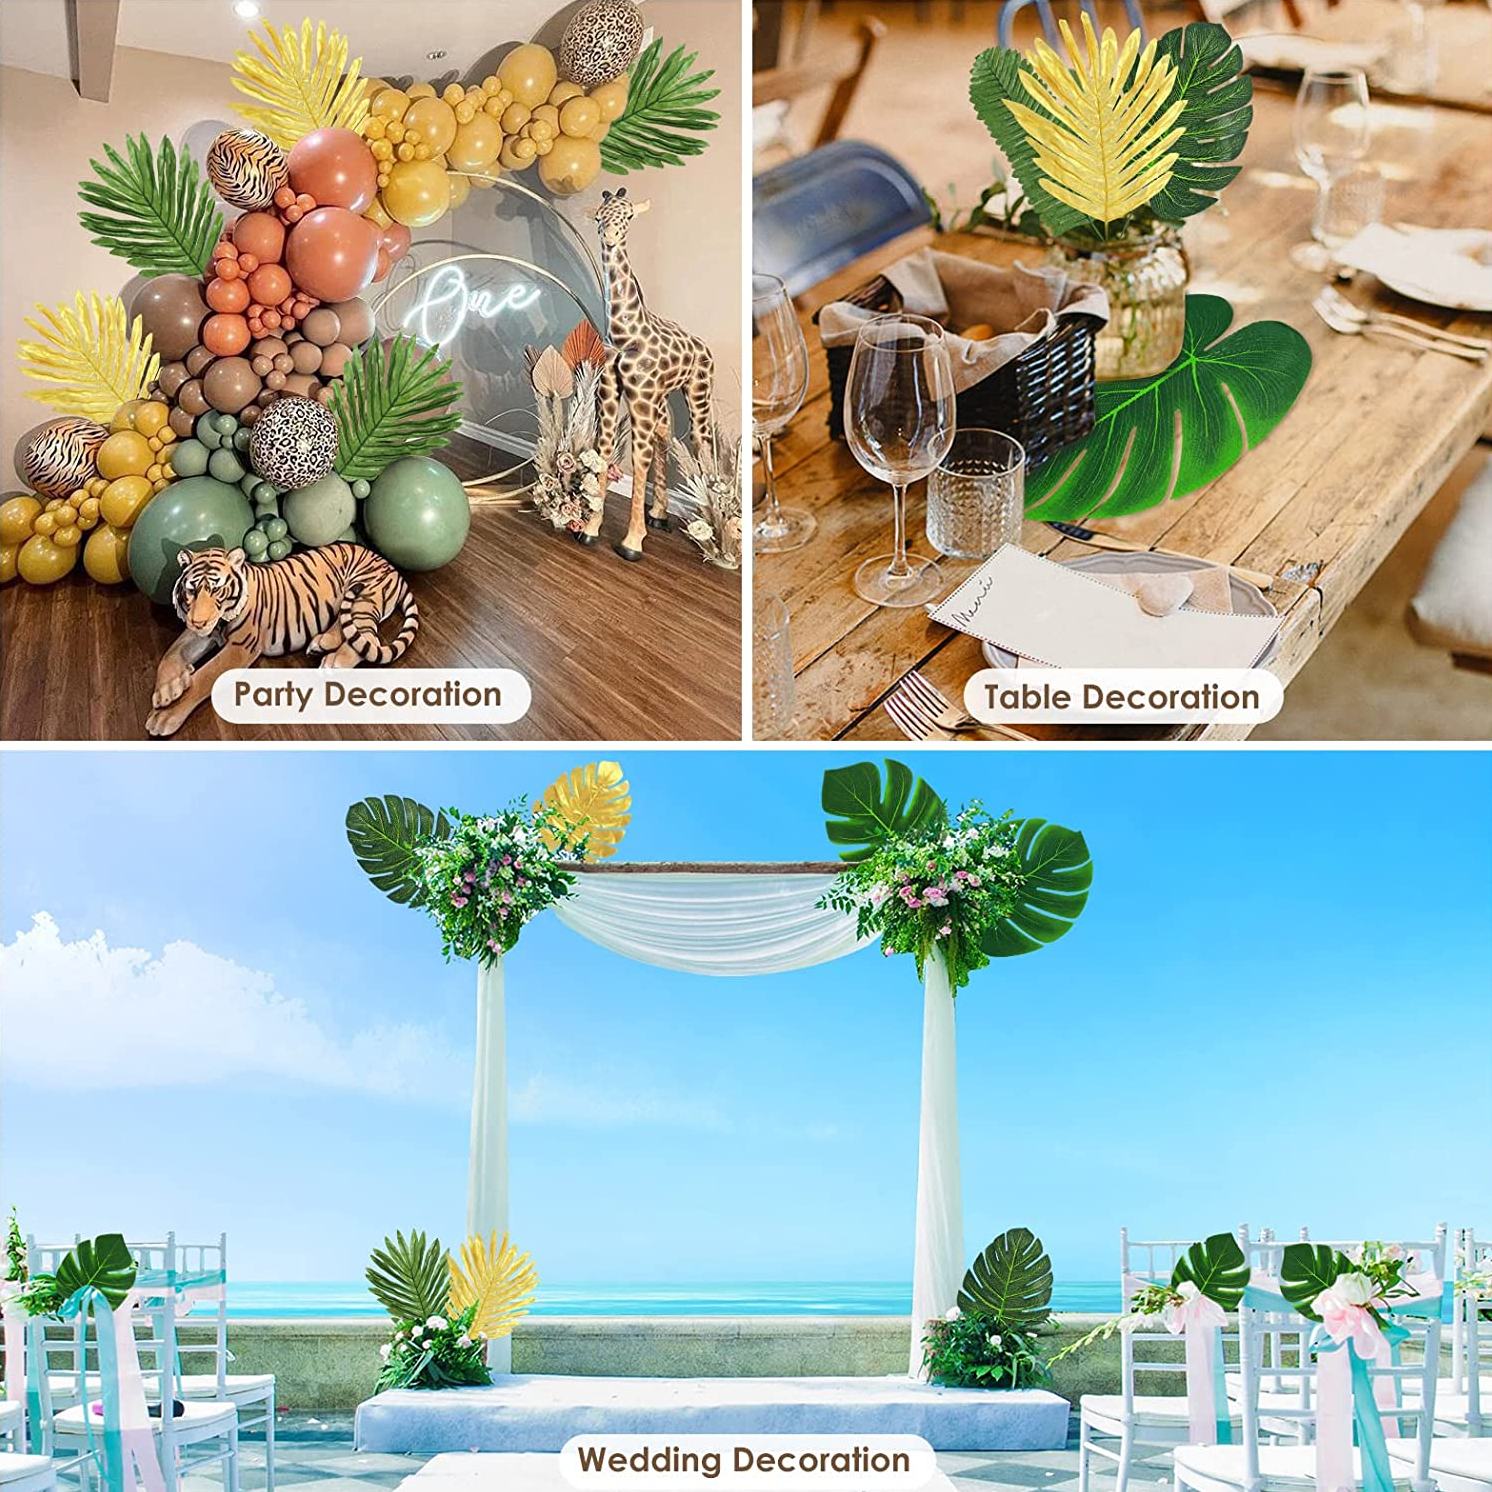  Moon Boat 120PCS Tropical Palm Leaves Plant Imitation Leaf-Hawaiian/Luau/Jungle  Party Table Decorations : Home & Kitchen